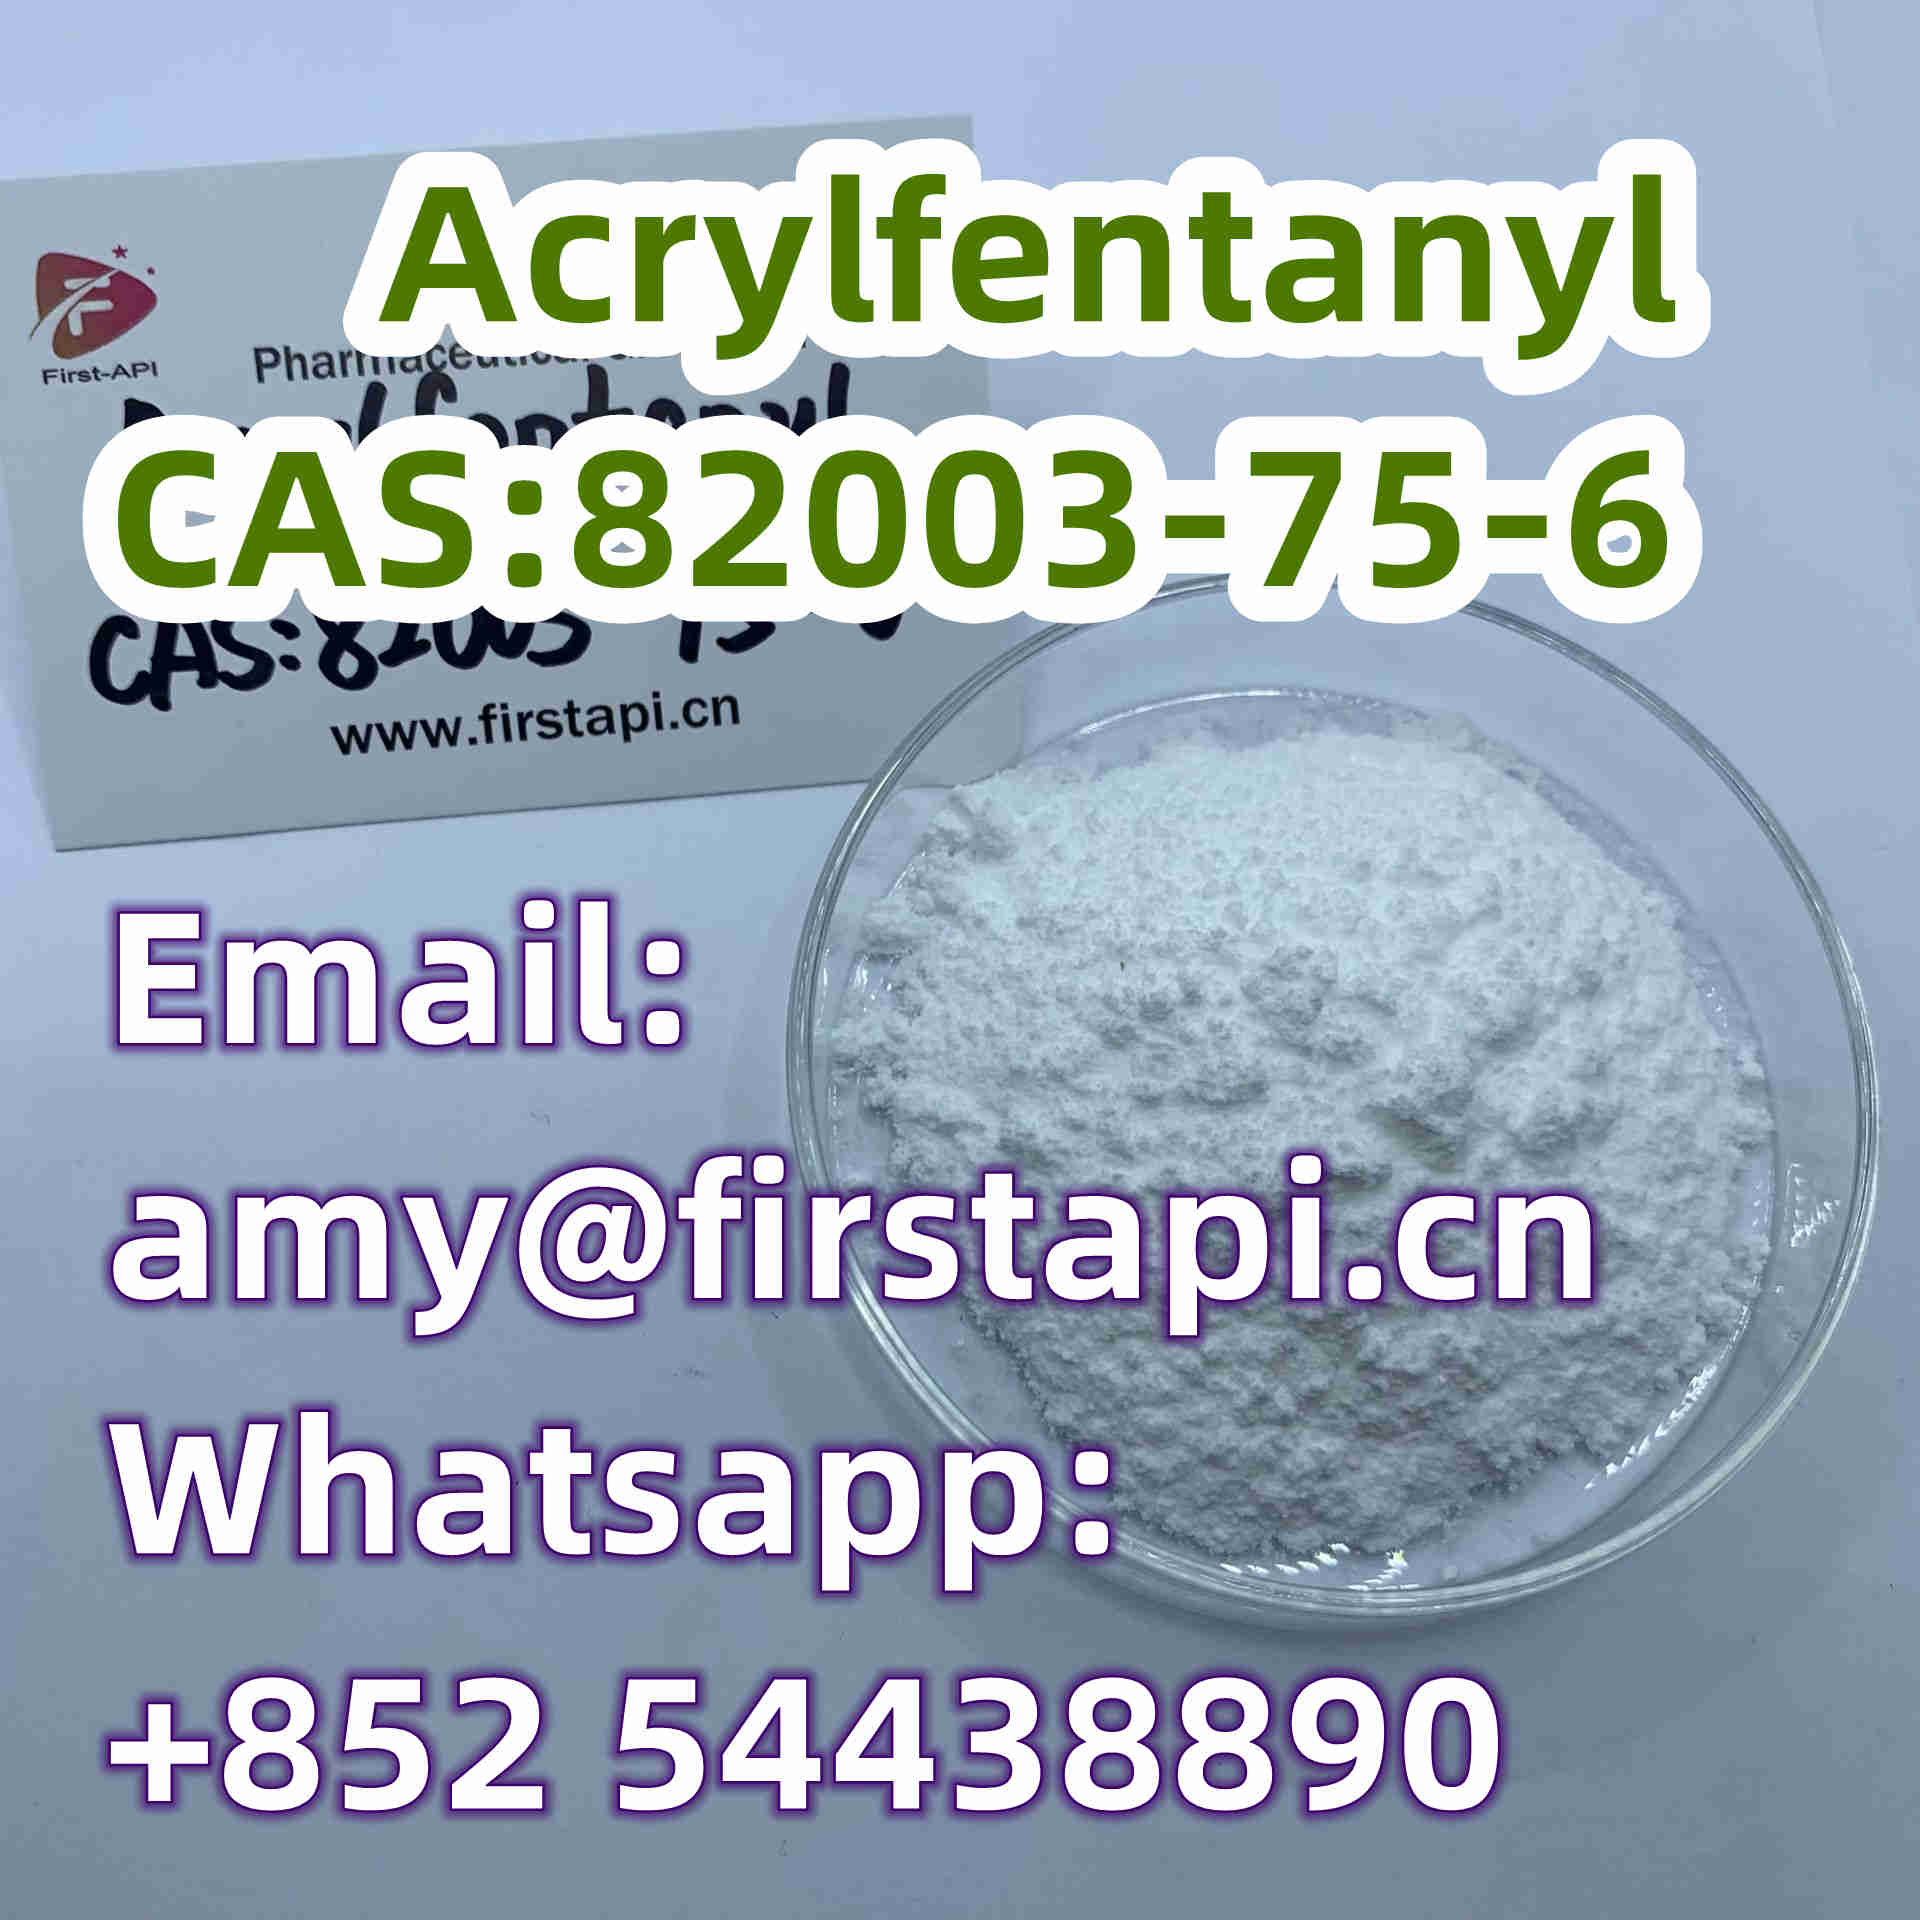 Acrylfentanyl,Whatsapp:+852 54438890,CAS No.:	82003-75-6,salable - photo